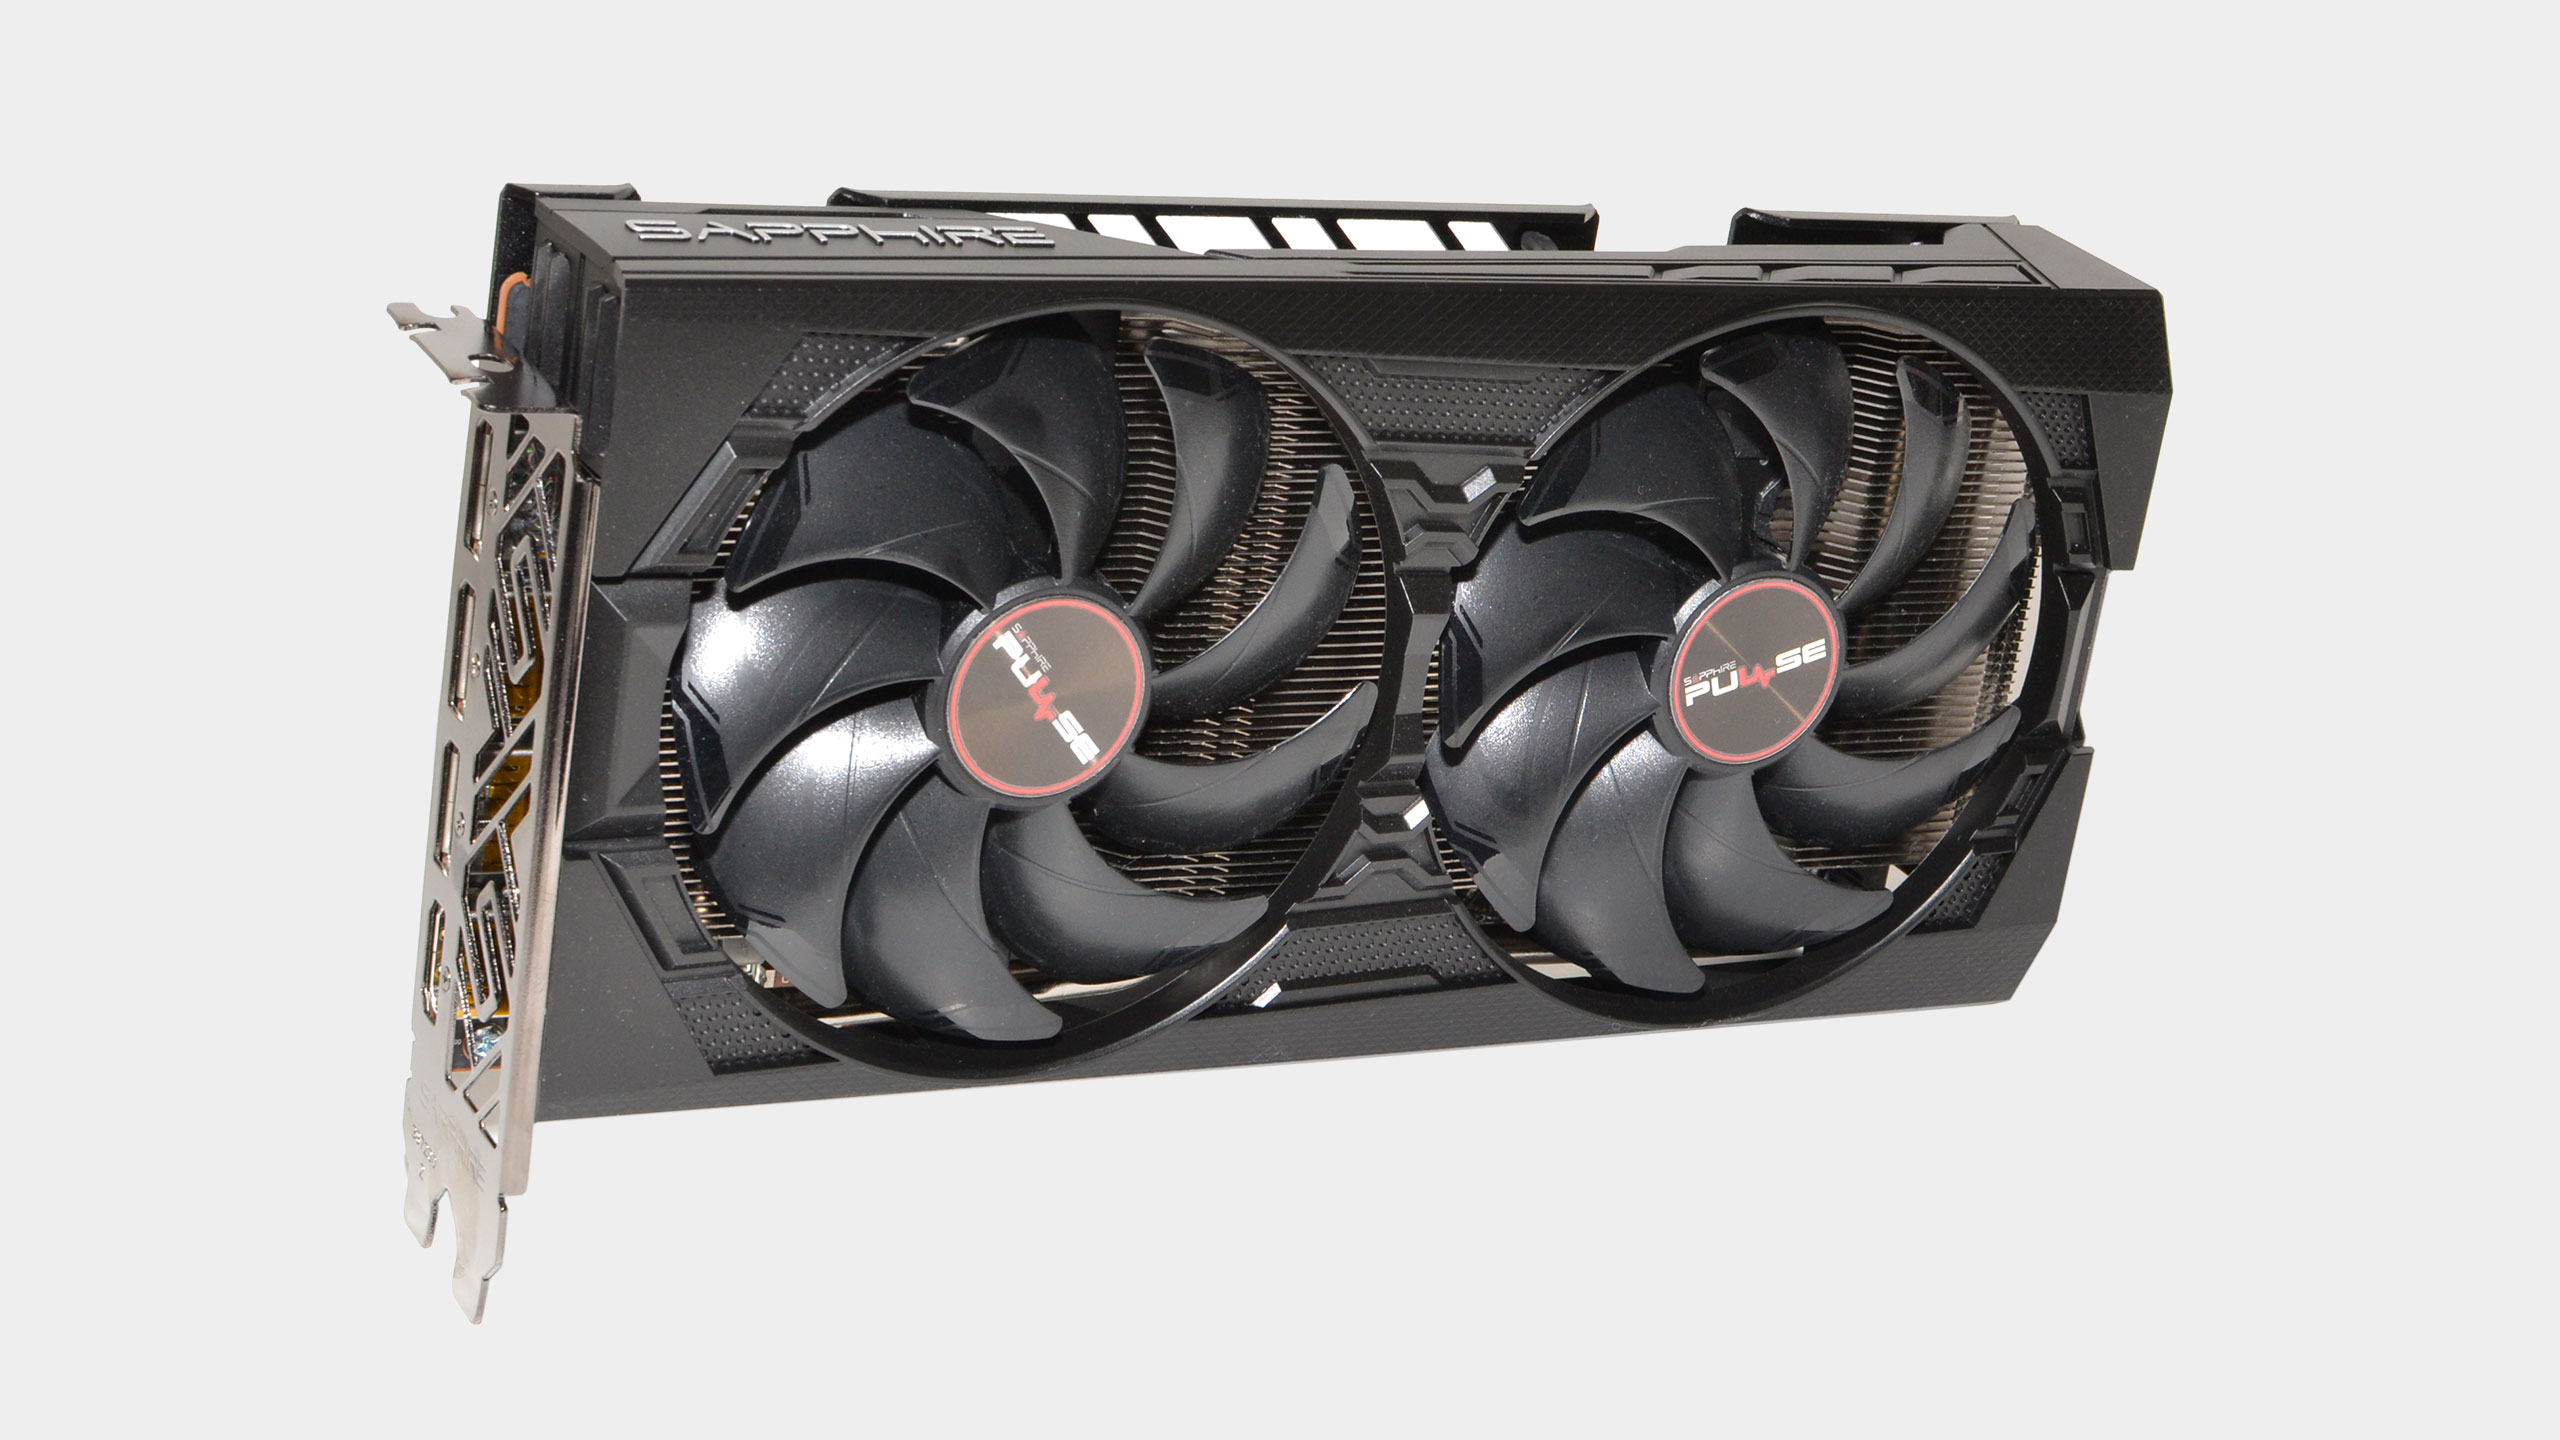  Should I buy an AMD Radeon RX 5500 XT GPU? 